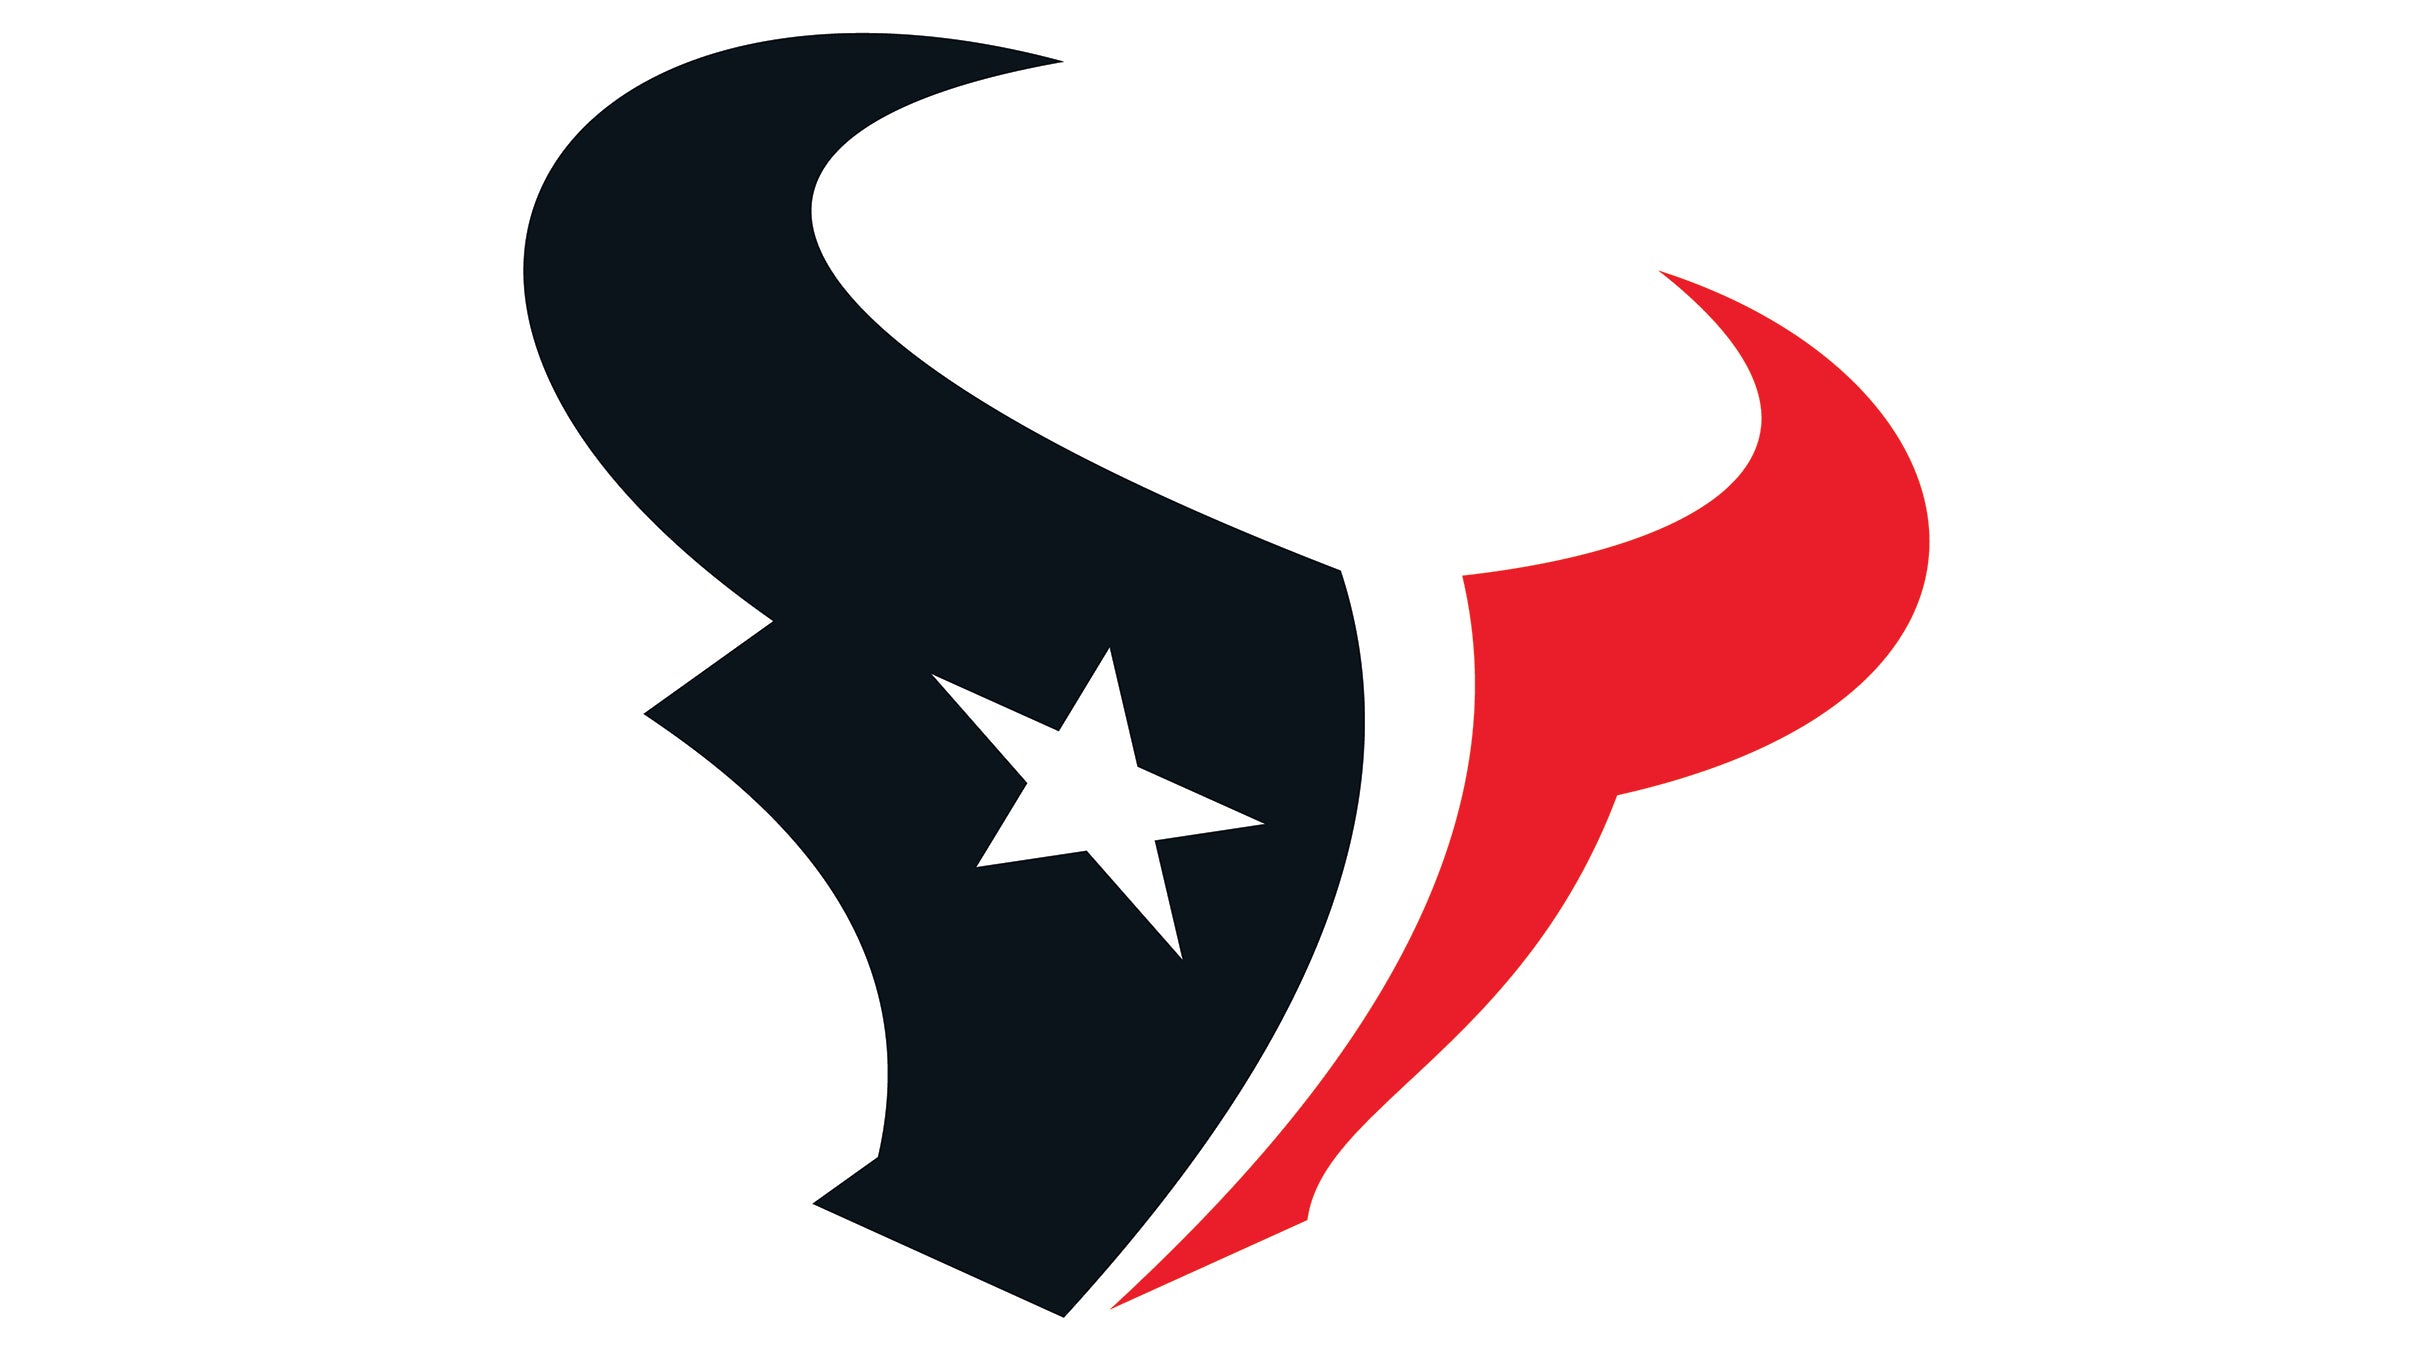 Houston Texans vs. Buffalo Bills in Houston promo photo for STicketmaster presale offer code